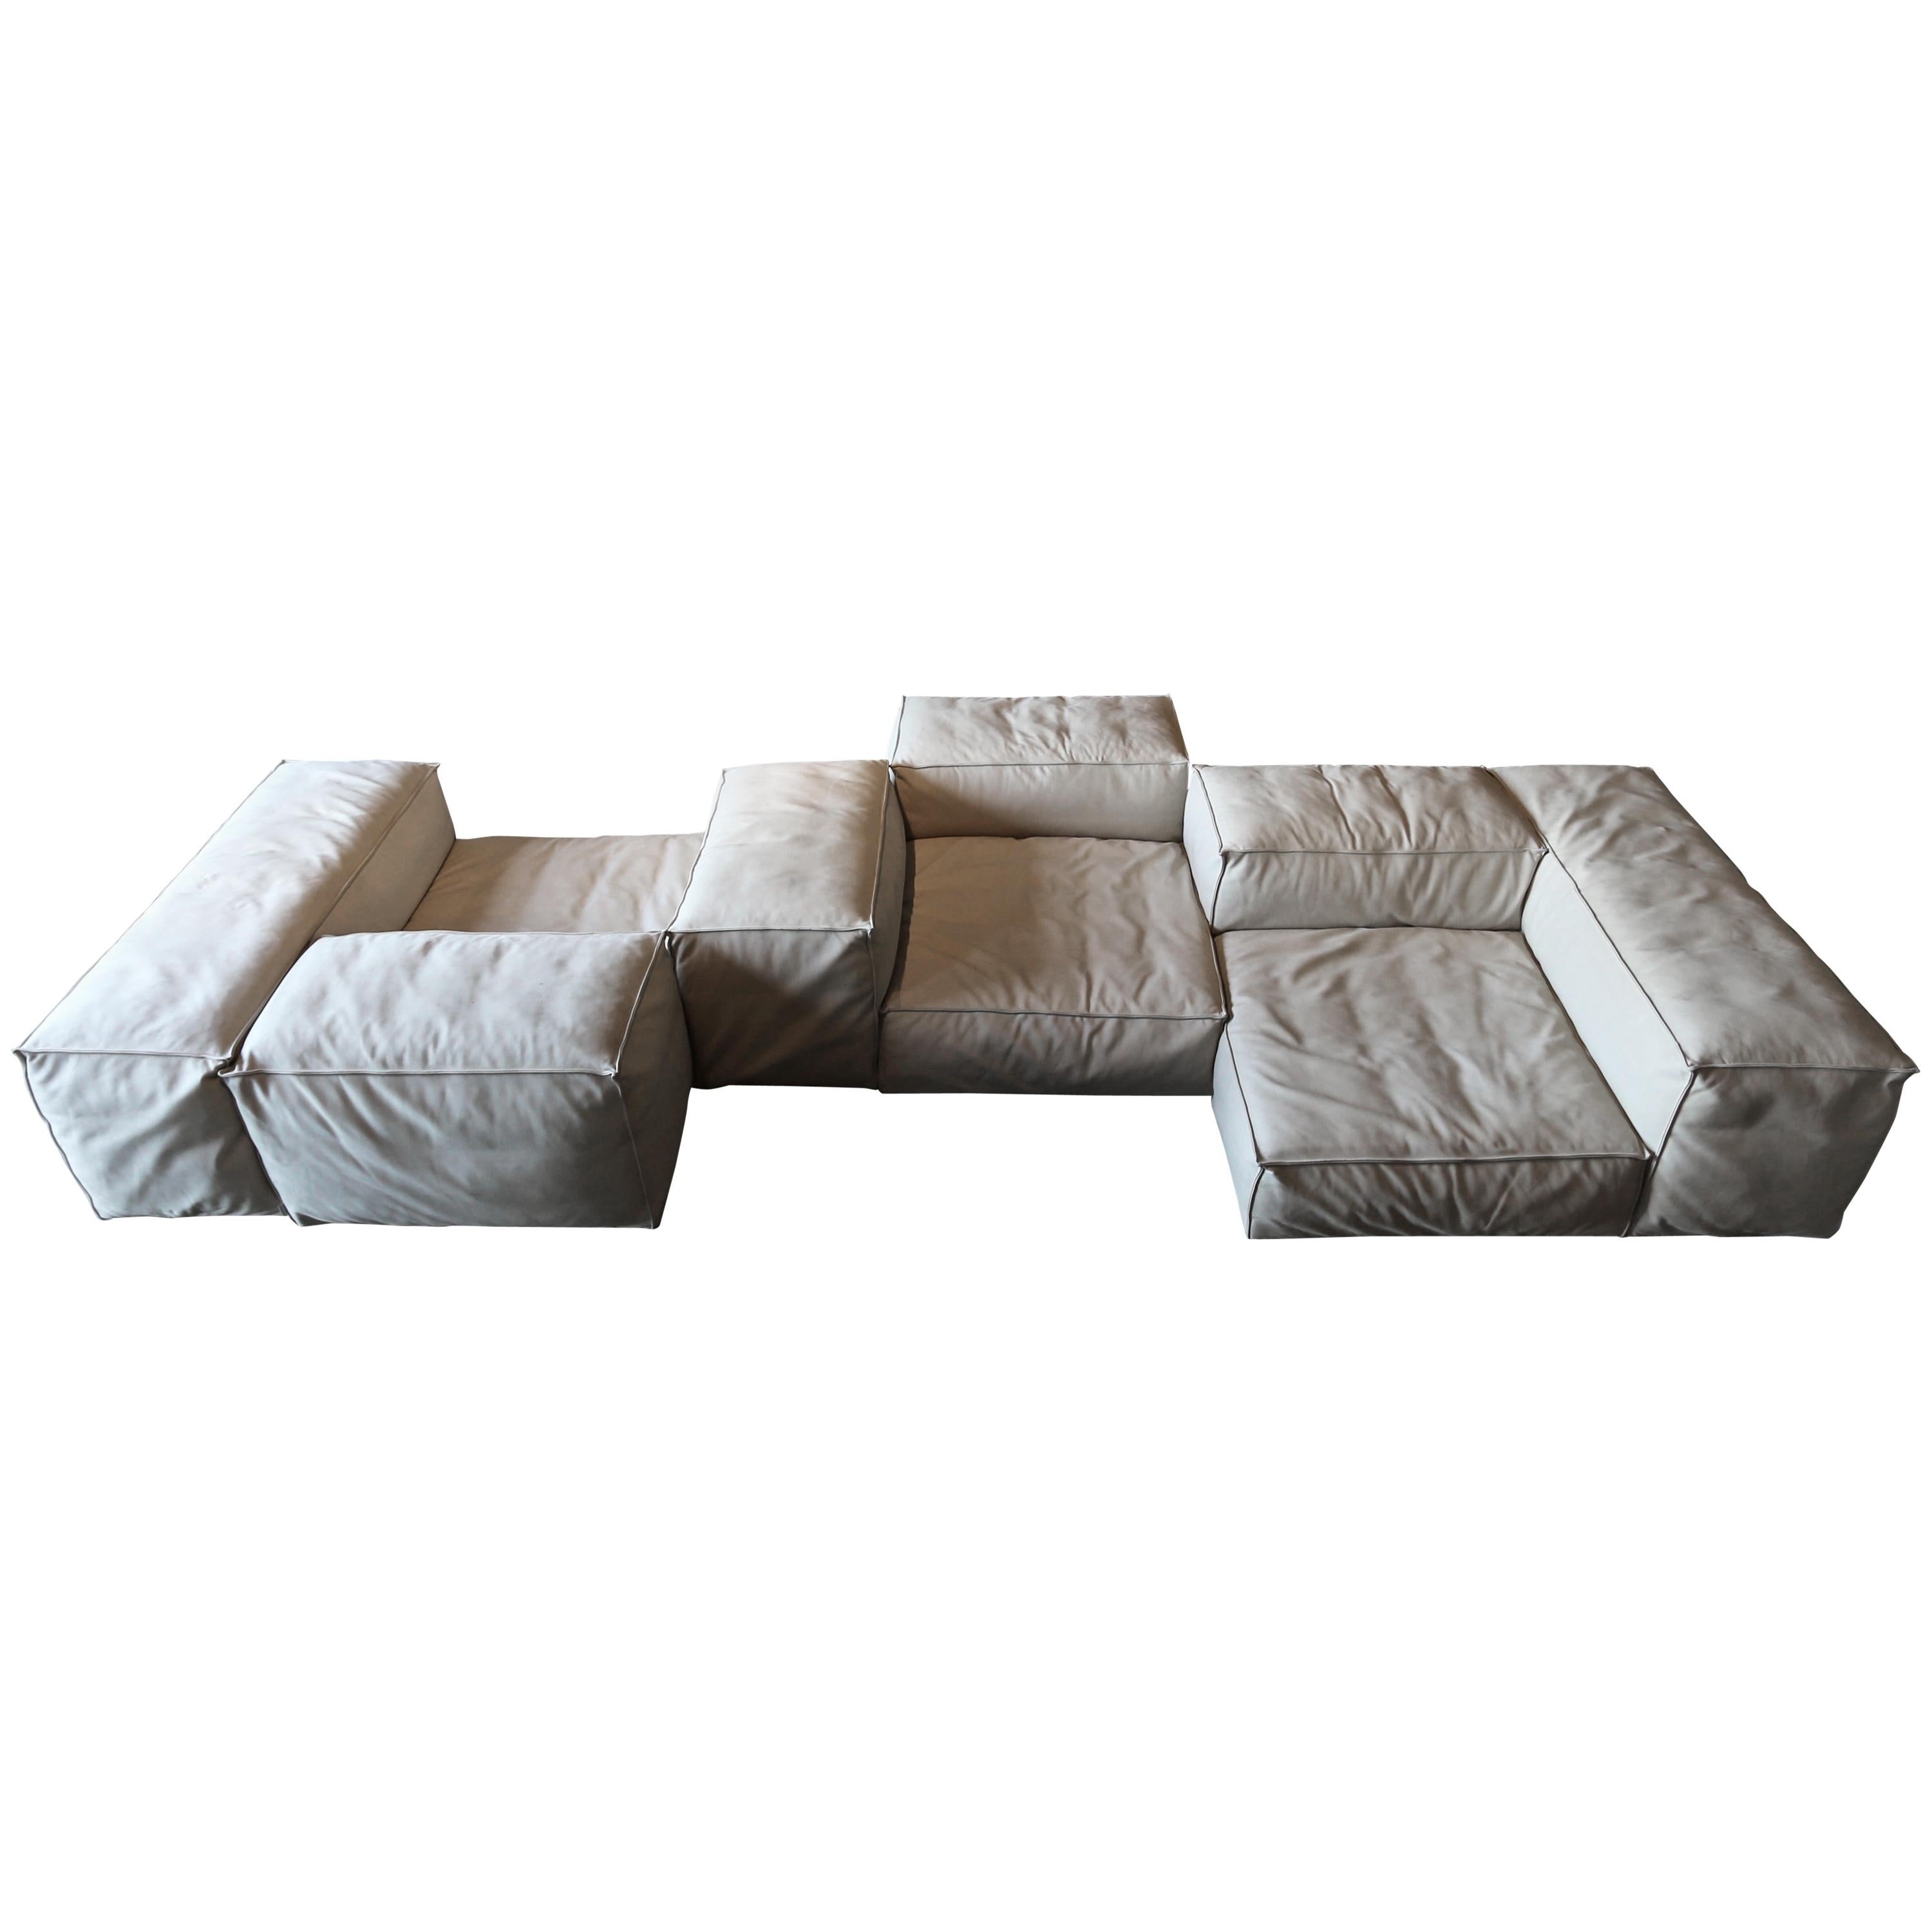 Piero Lissoni "Extra Soft" Modular Sofa for Living Divani, circa 2008